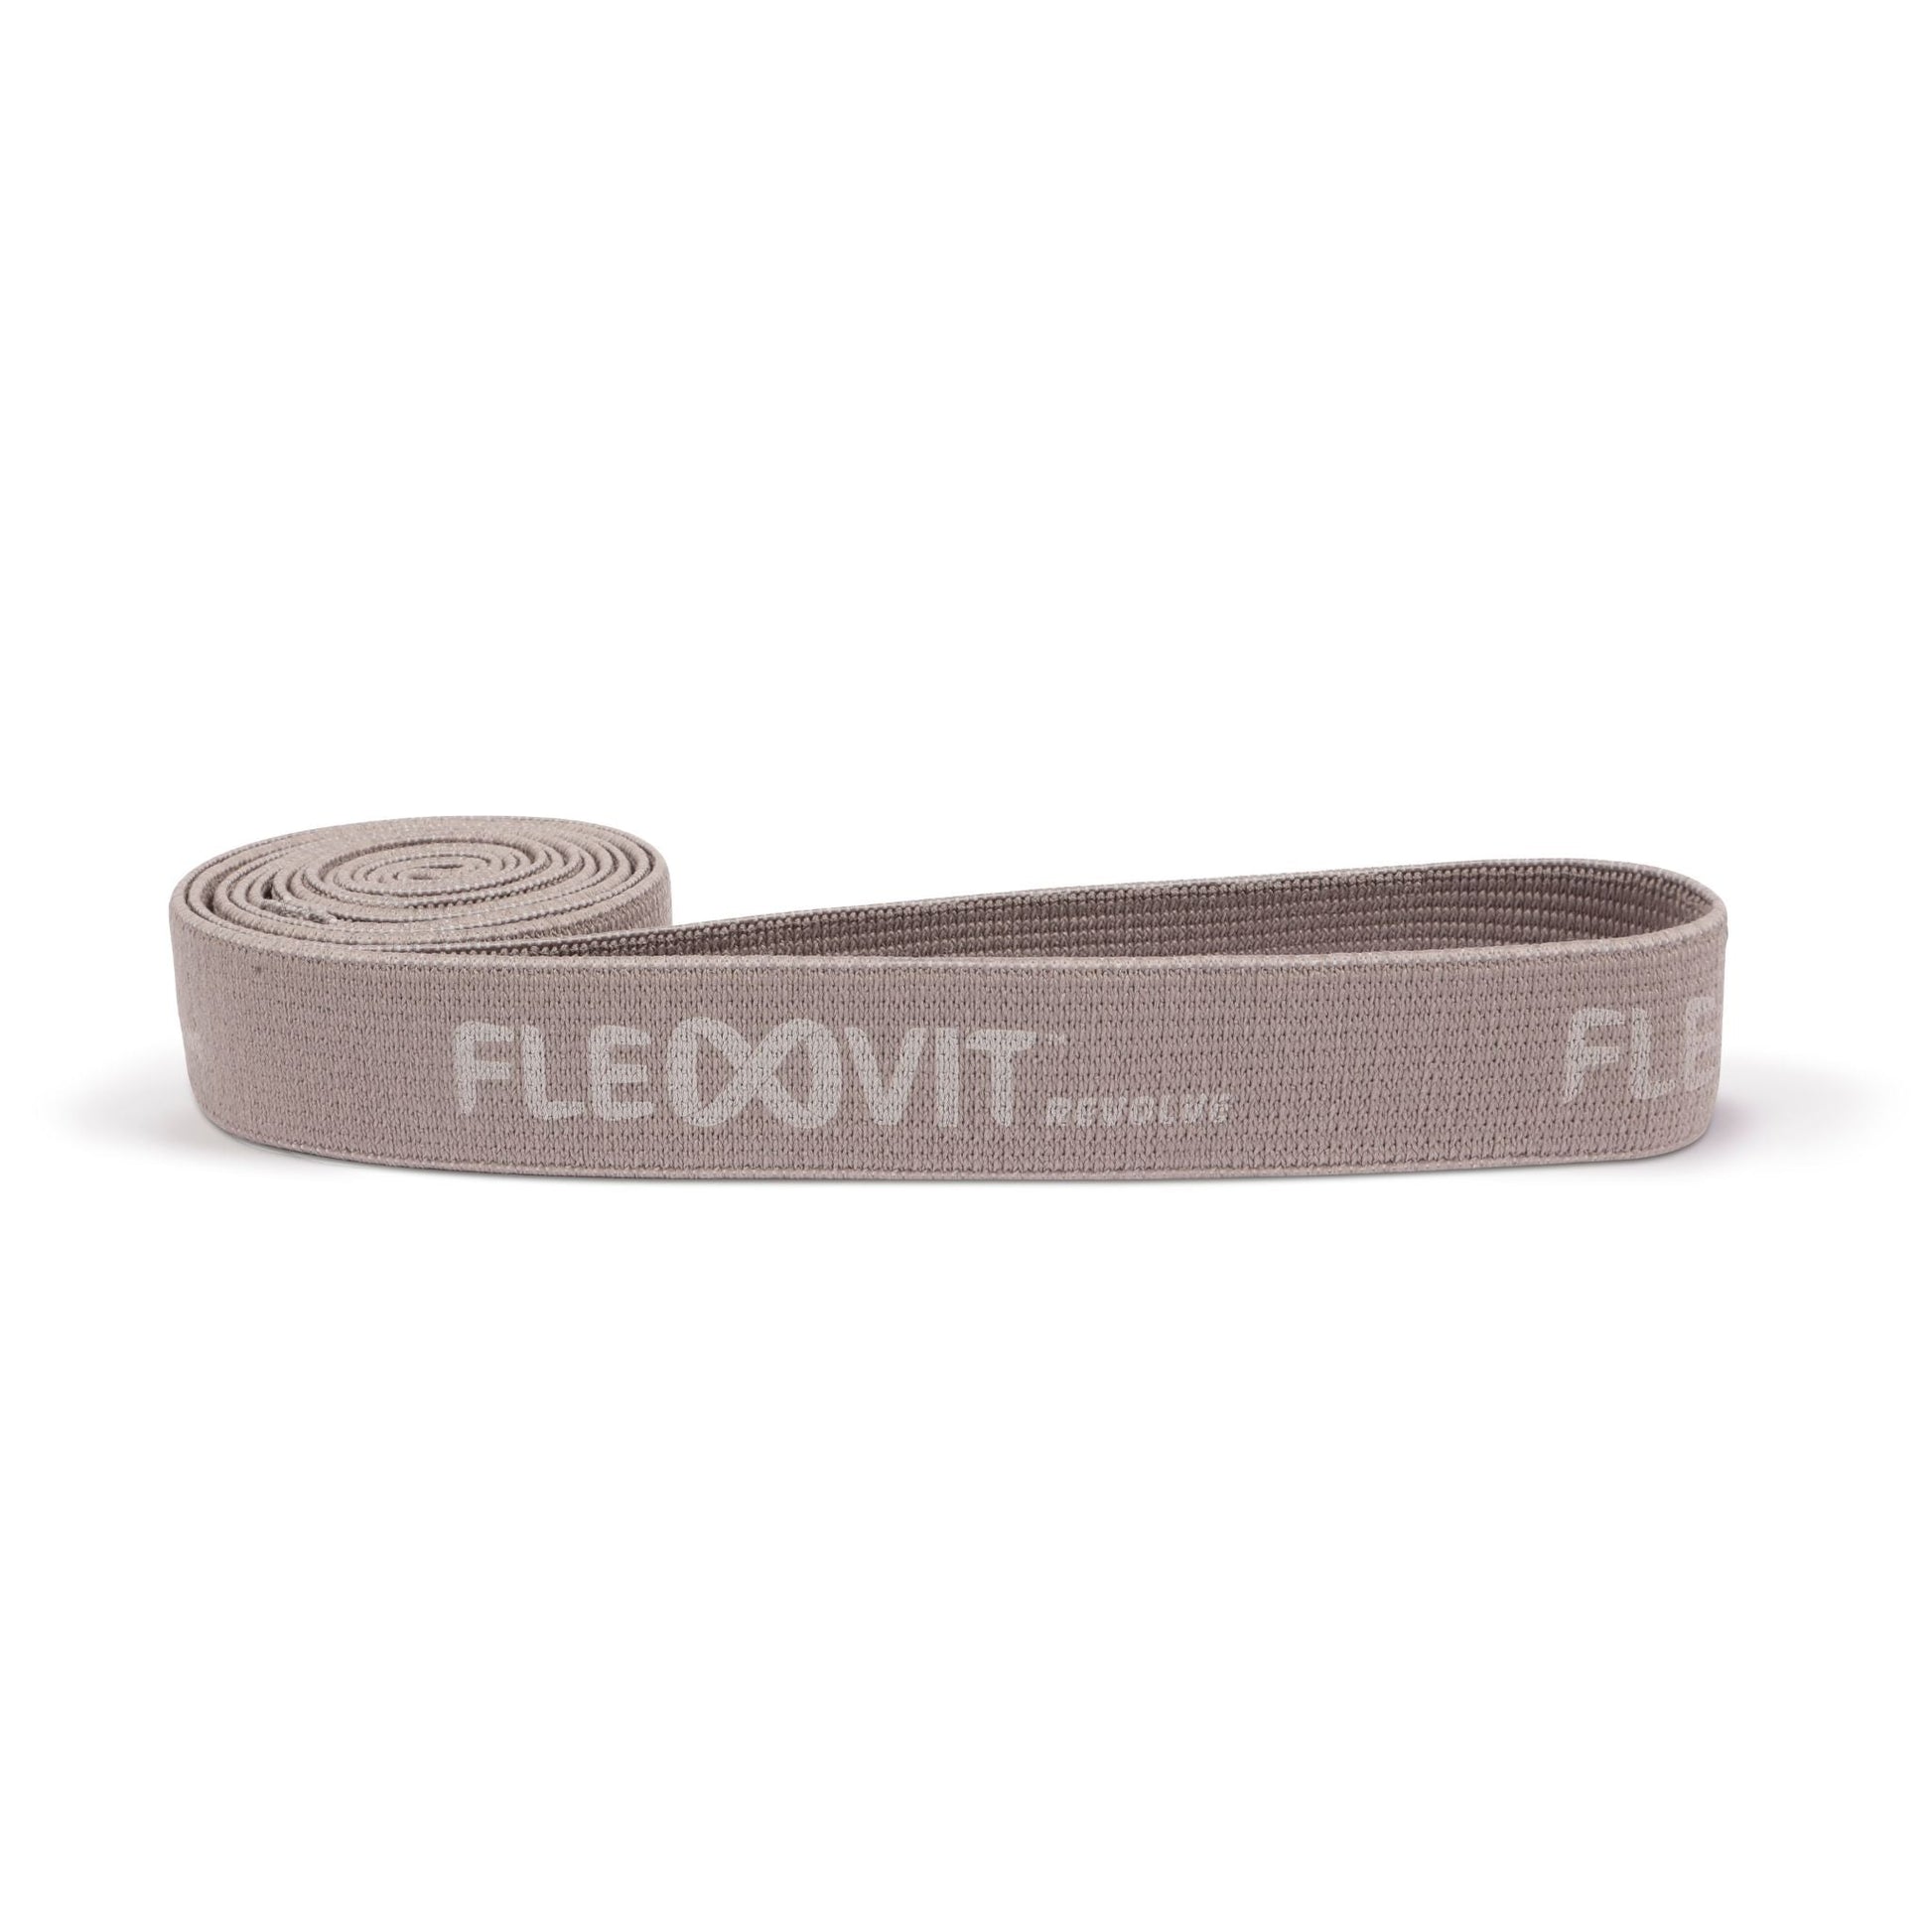 FLEXVIT Revolve Bands - PEAK LABS